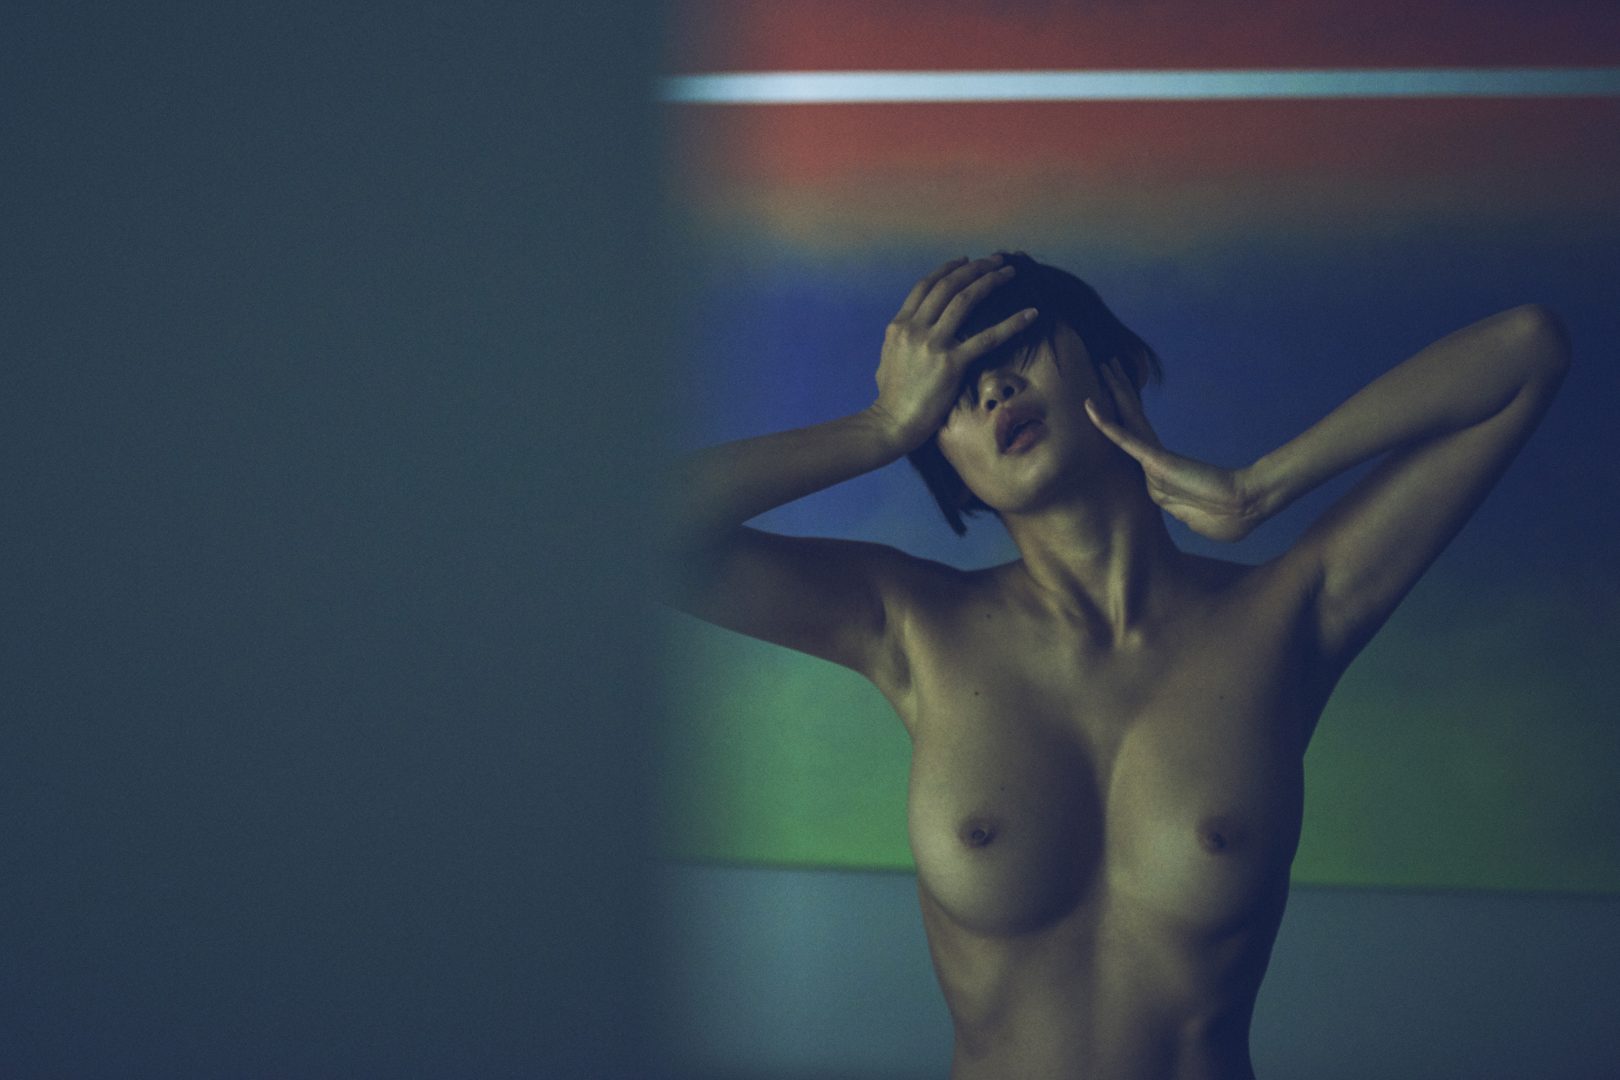 Naked girl in hotel room by Stefan Rappo